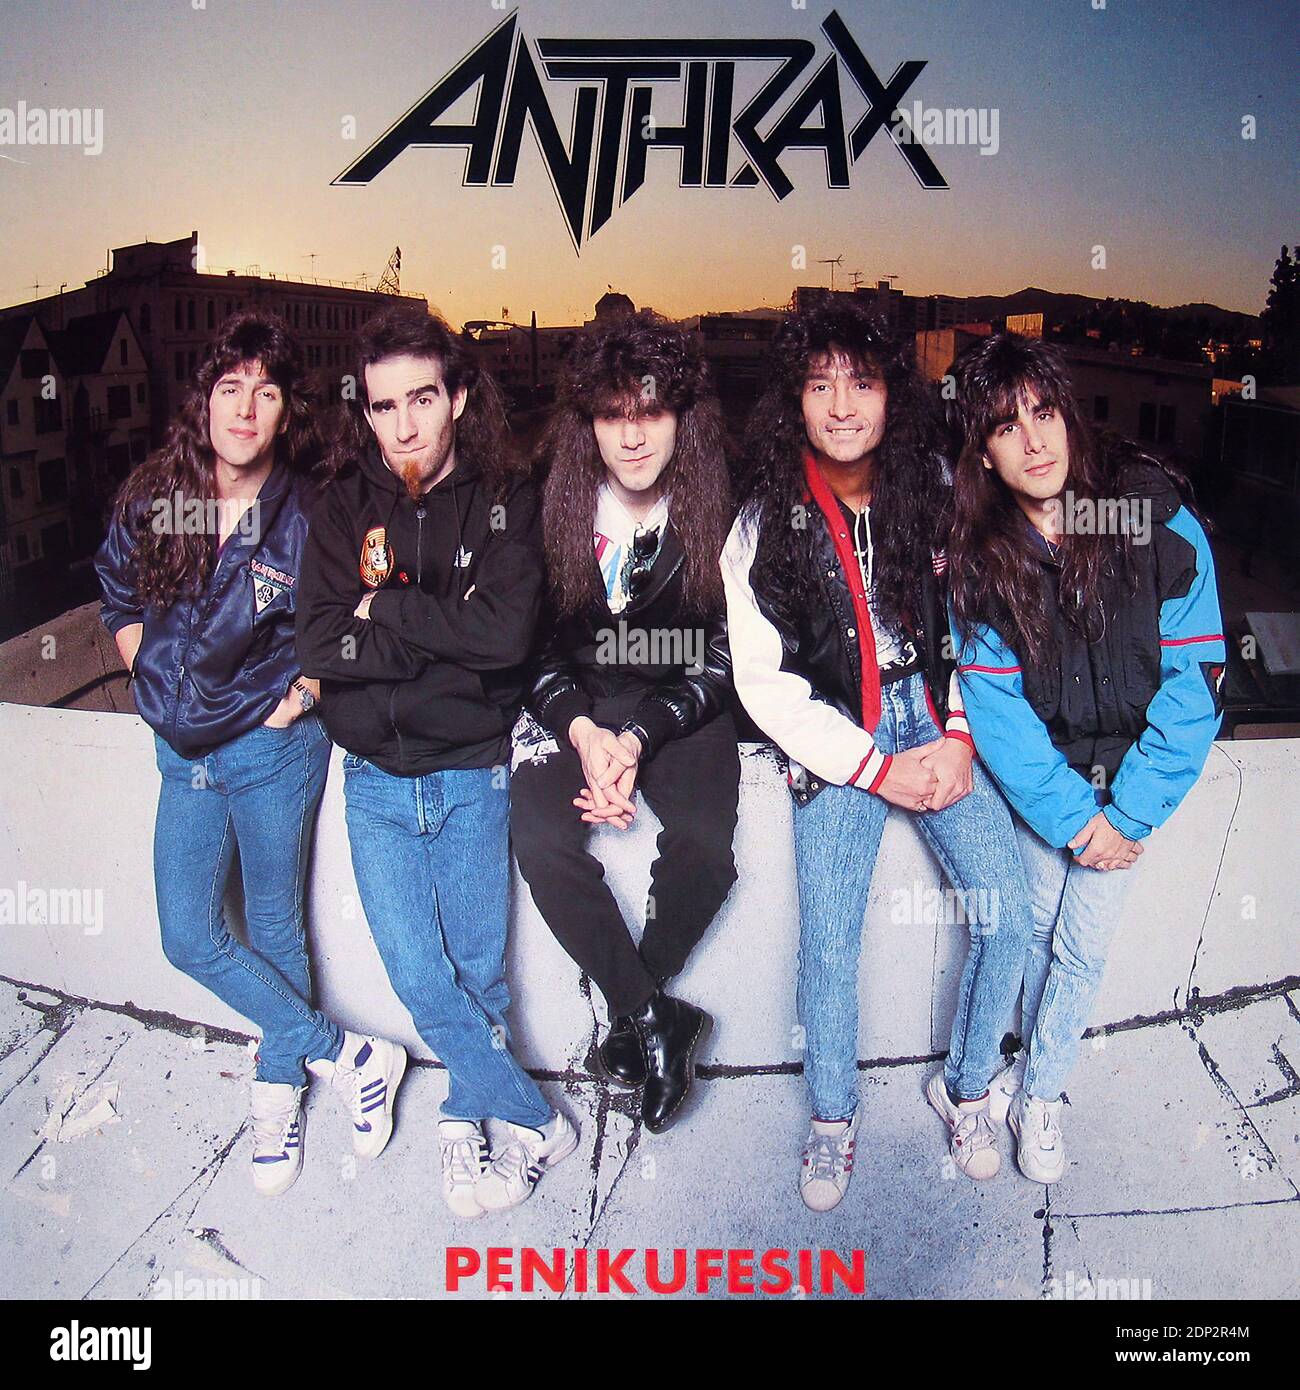 Anthrax Penikufesin Antisocial French Version 12  VInyl - Vintage Vinyl Record Cover Stock Photo